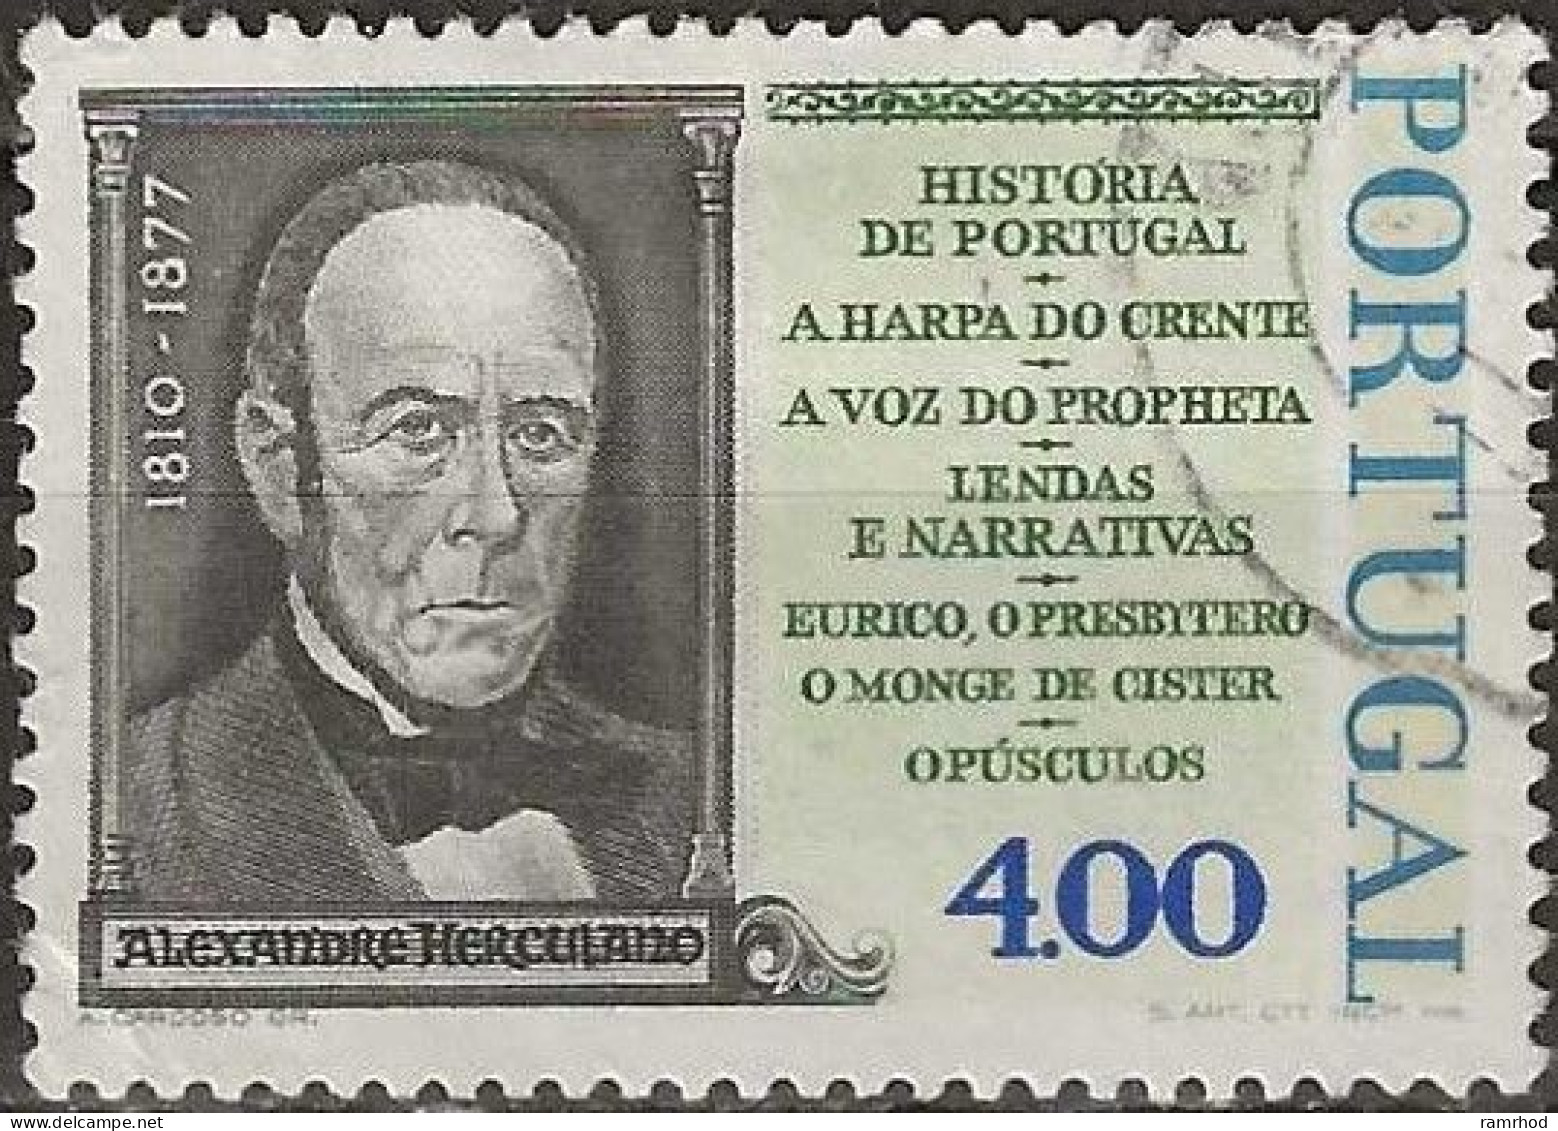 PORTUGAL 1977 Death Centenary Of Alexandre Herculano (writer And Politician) - 4e Alexandre Herculano FU - Used Stamps